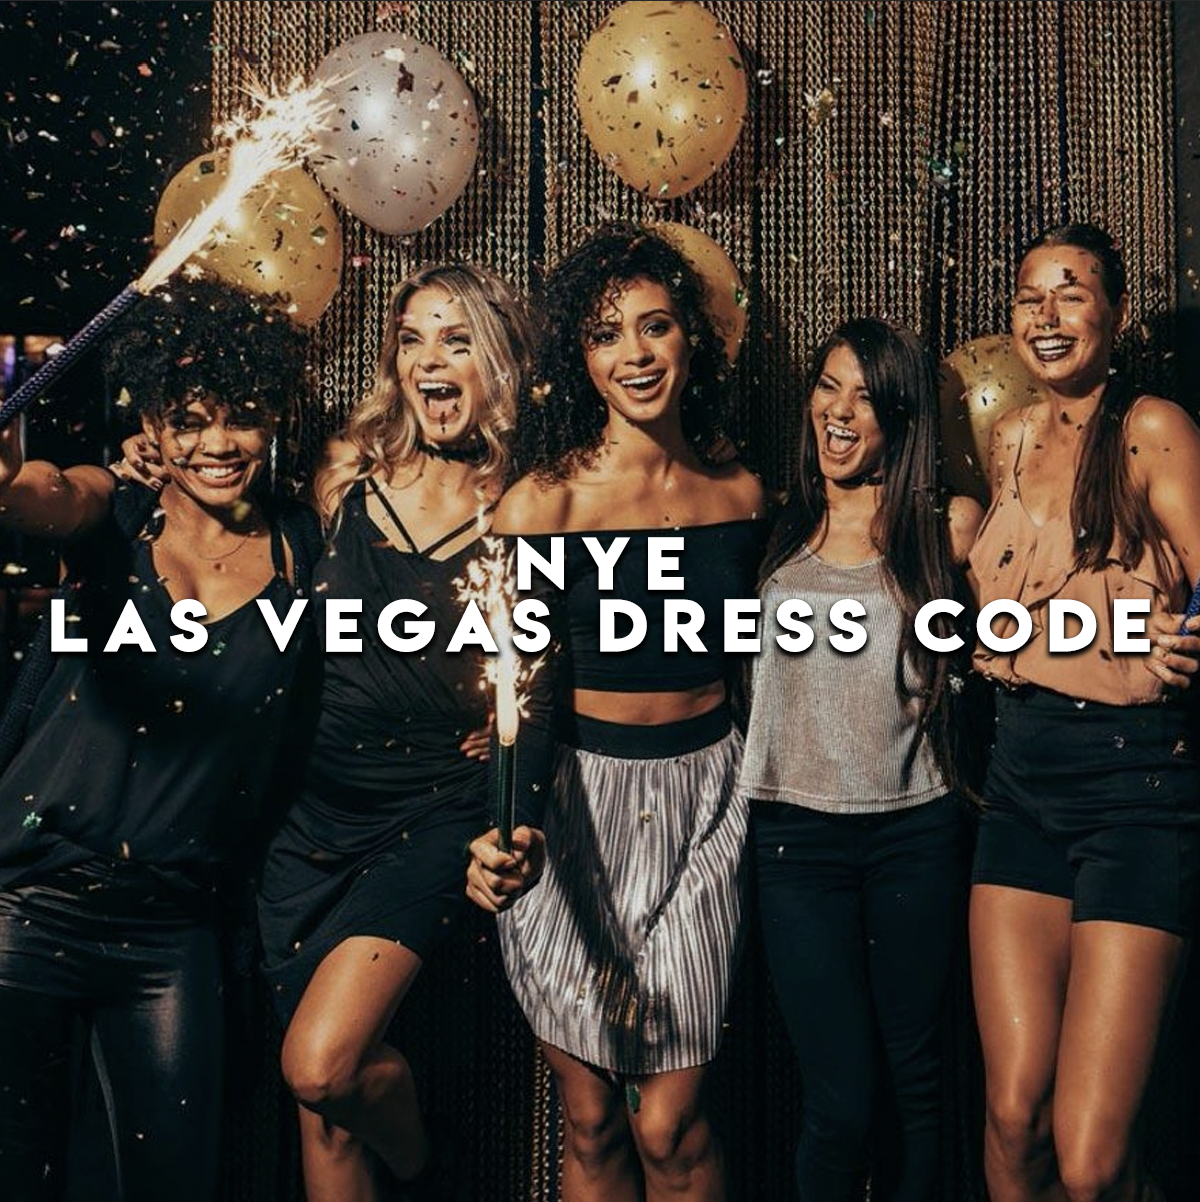 Las Vegas New Year's Eve Dress Code